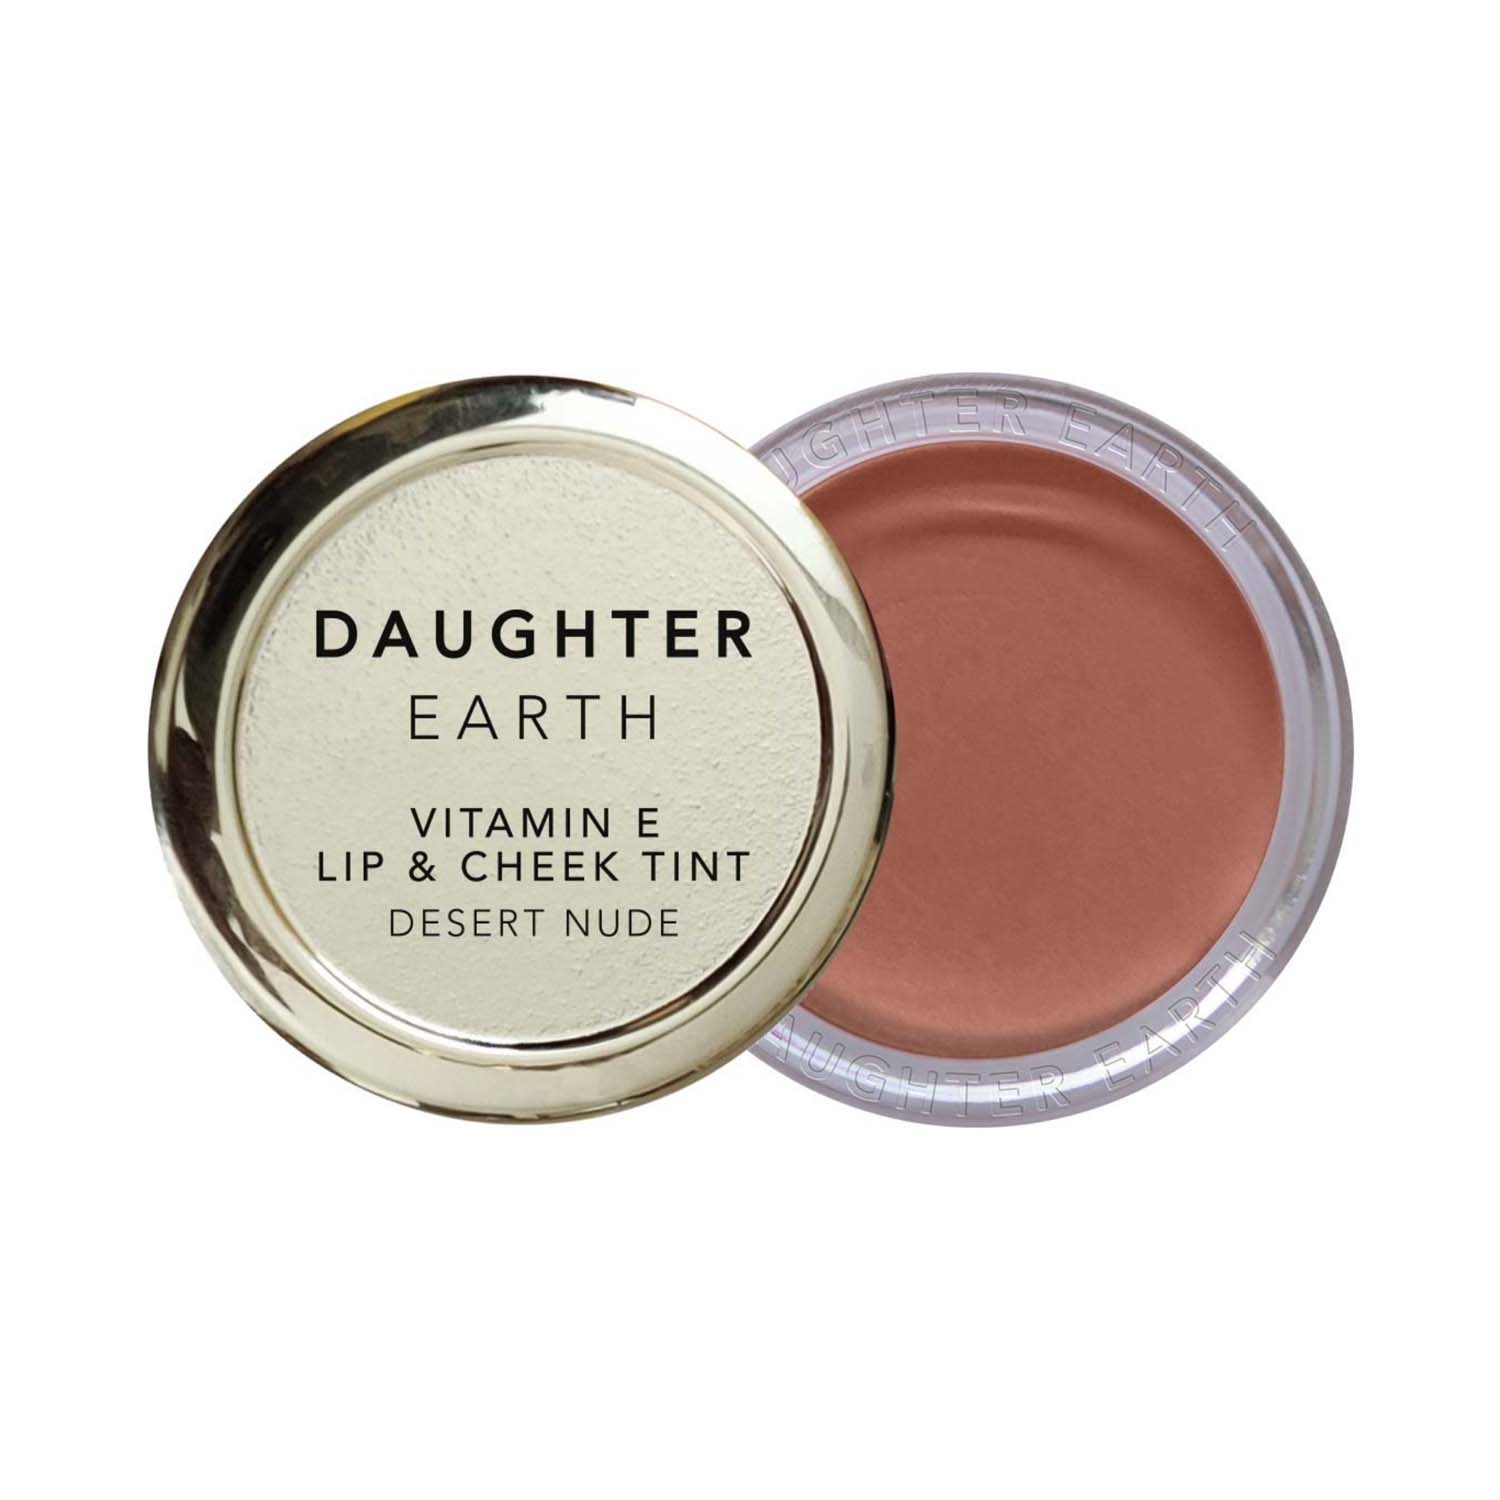 DAUGHTER EARTH | DAUGHTER EARTH Vitamin E Lip & Cheek Tint - Desert Nude (4.5g)